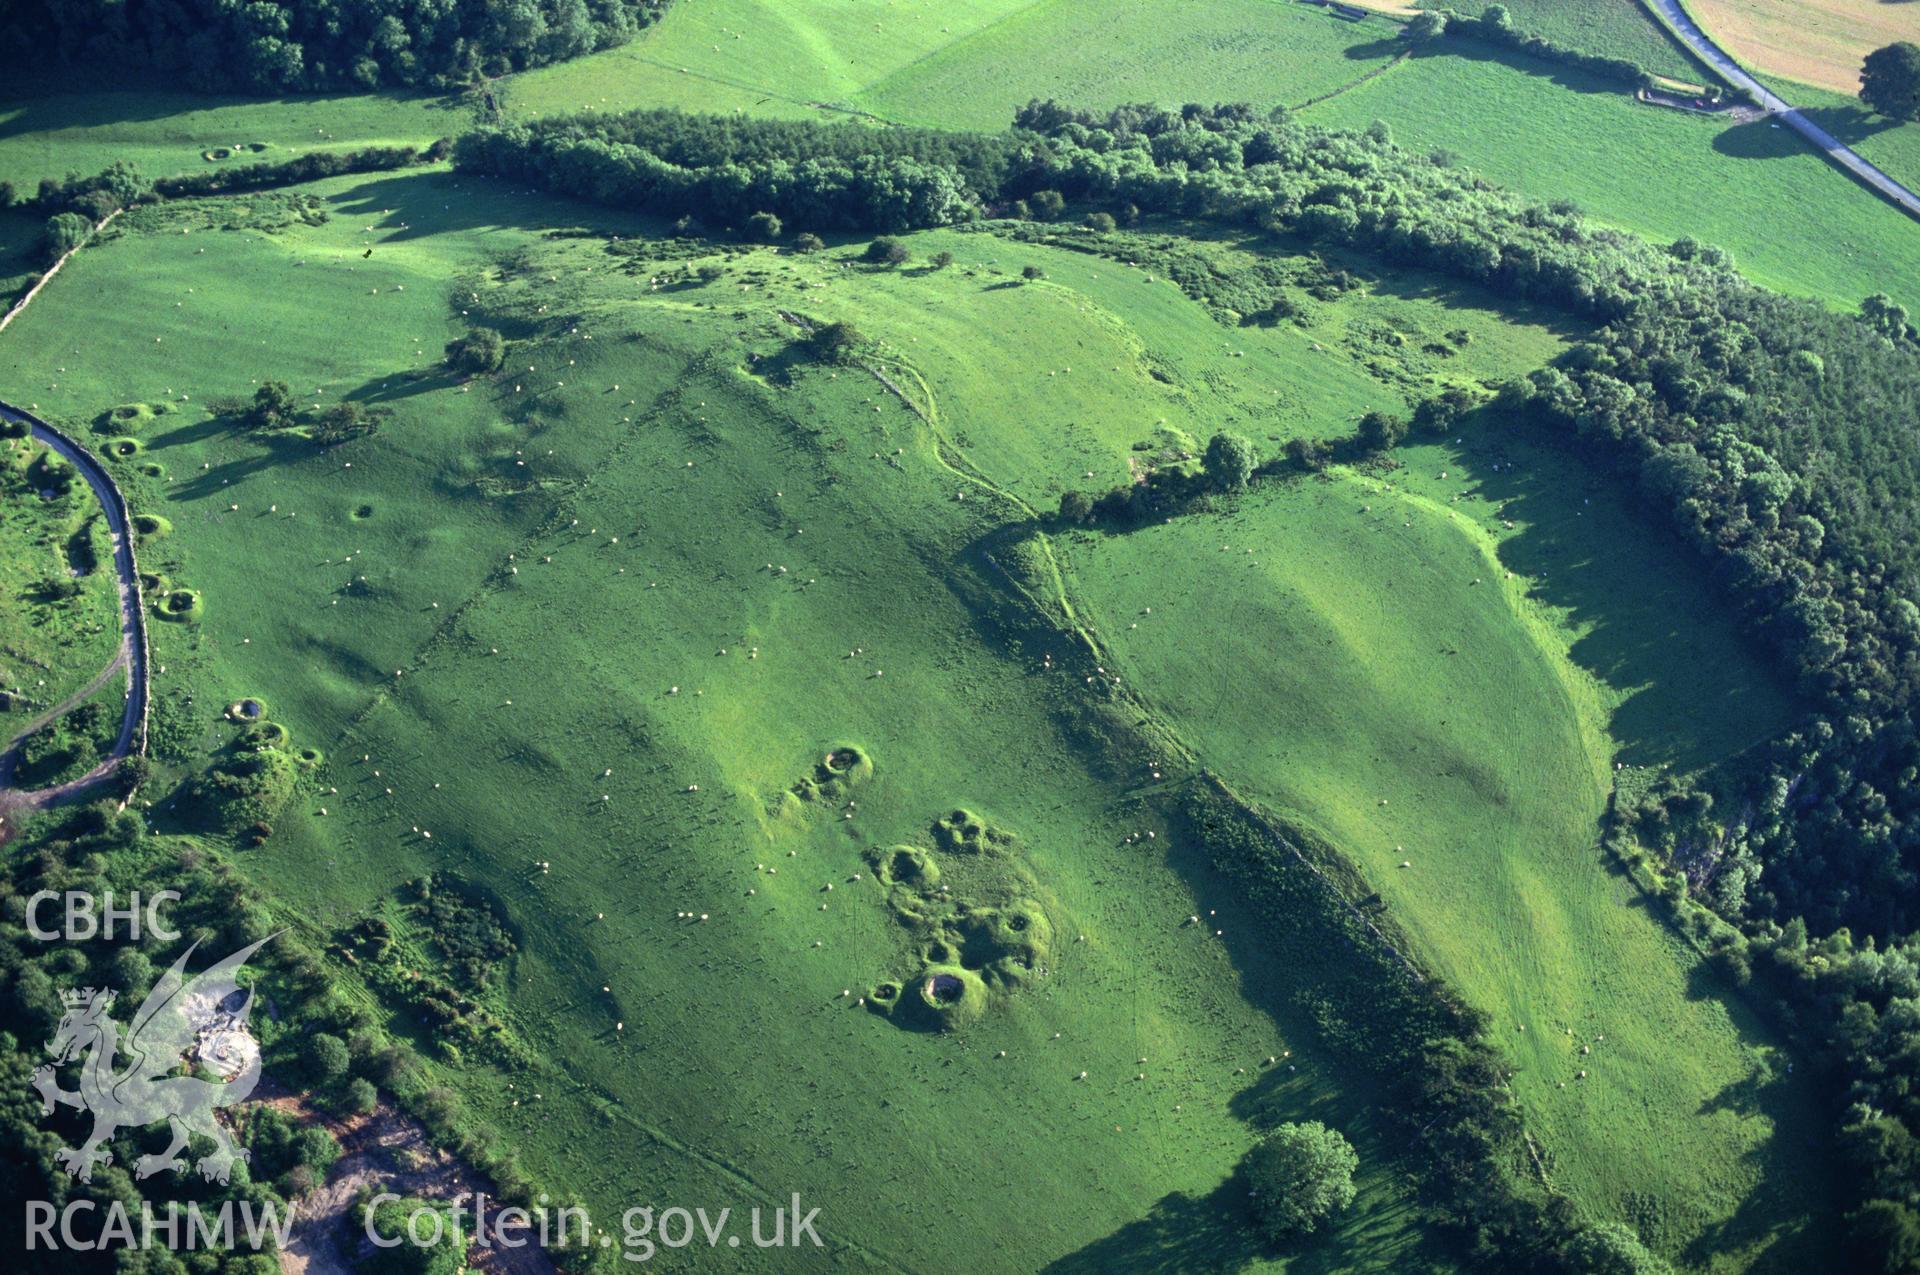 Slide of RCAHMW colour oblique aerial photograph of Gwernymynedd South Limekilns, taken by C.R. Musson, 27/6/1993.